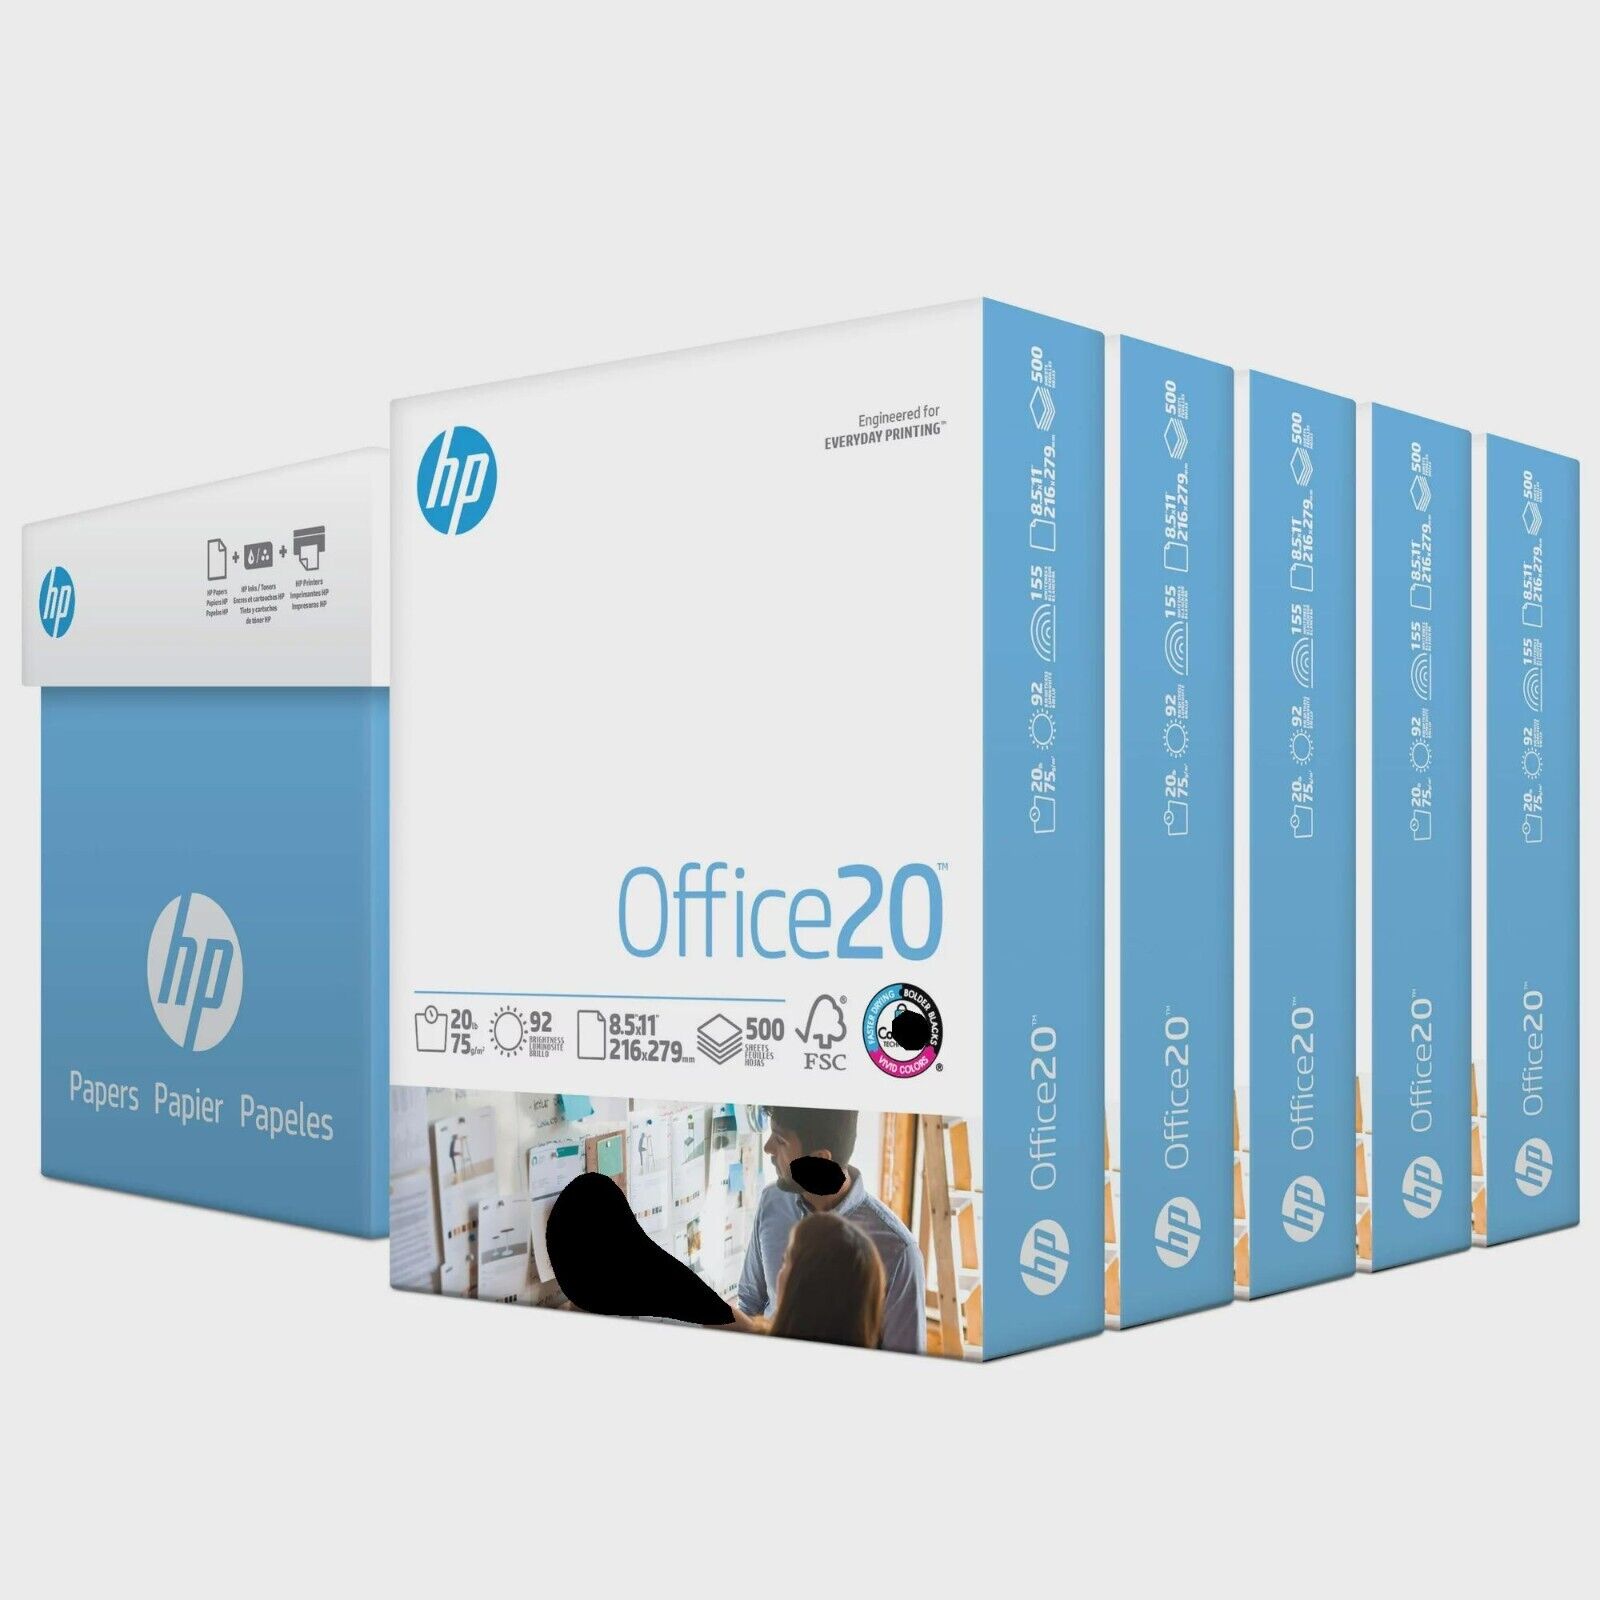 HP Office20, 20lb, 8.5 x 11, 5 reams, 2500 sheets